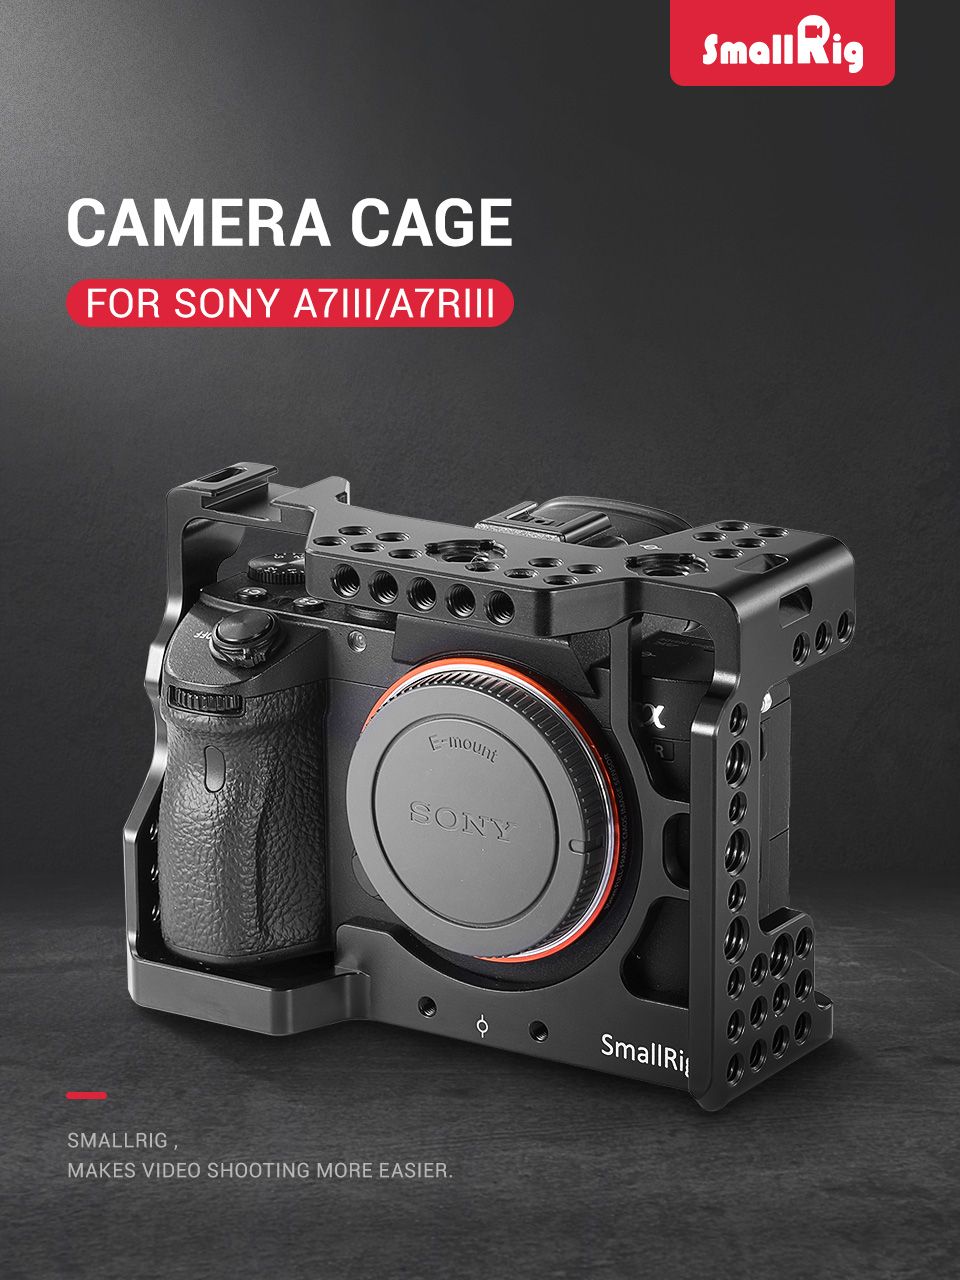 SmallRig-2087-Camera-Cage-A7R3-A7RIII-A7III-Camera-Cage-for-Sony-A7RIII-A7M3-A7III-W-Arri-Locating-C-1726650